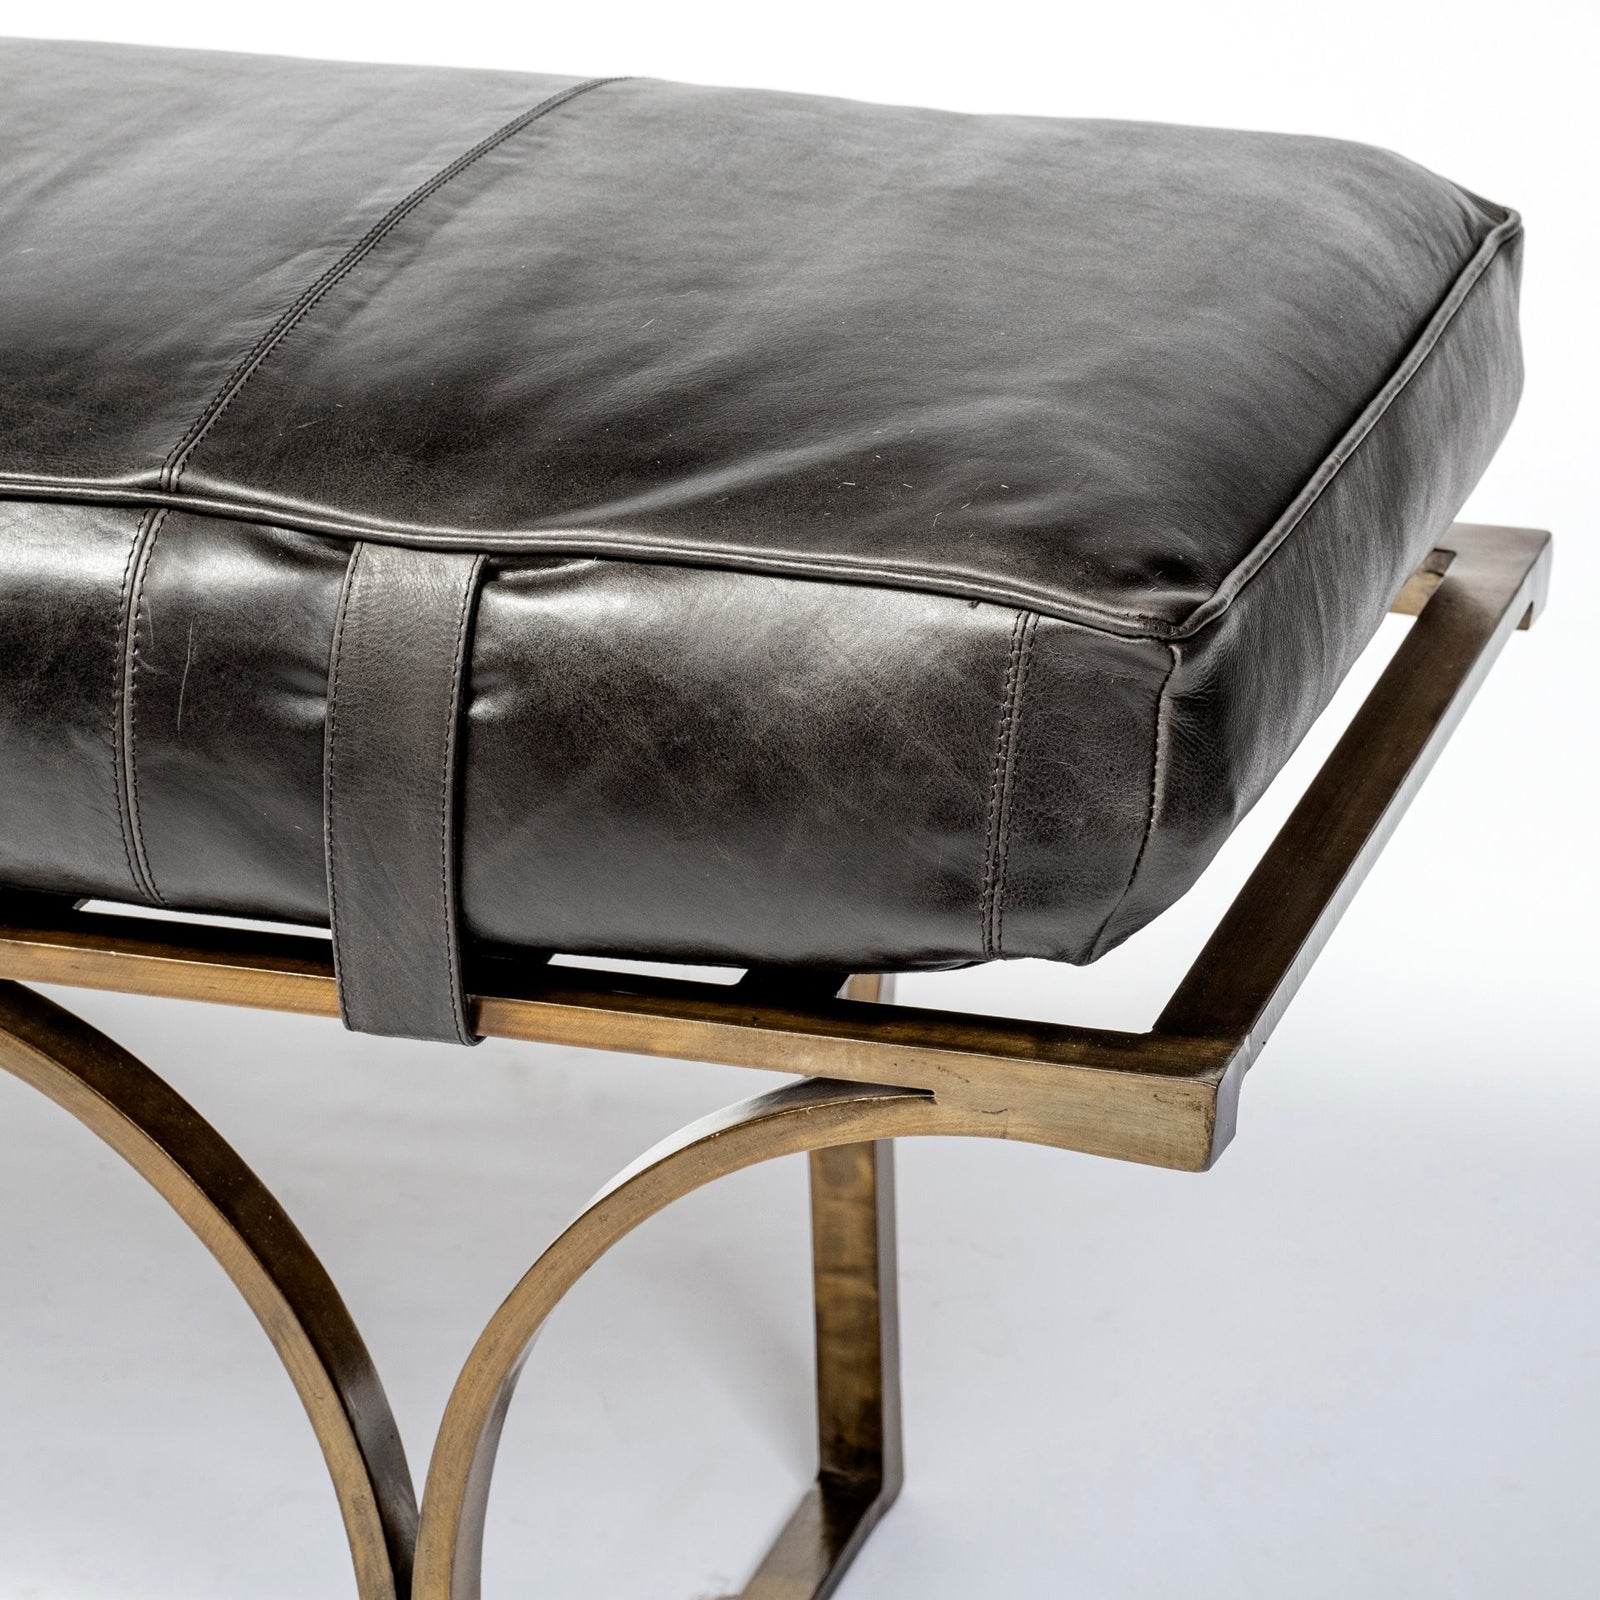 Rectangular Metalantiqued-Gold Black Genuine Leather Seat Accent Bench